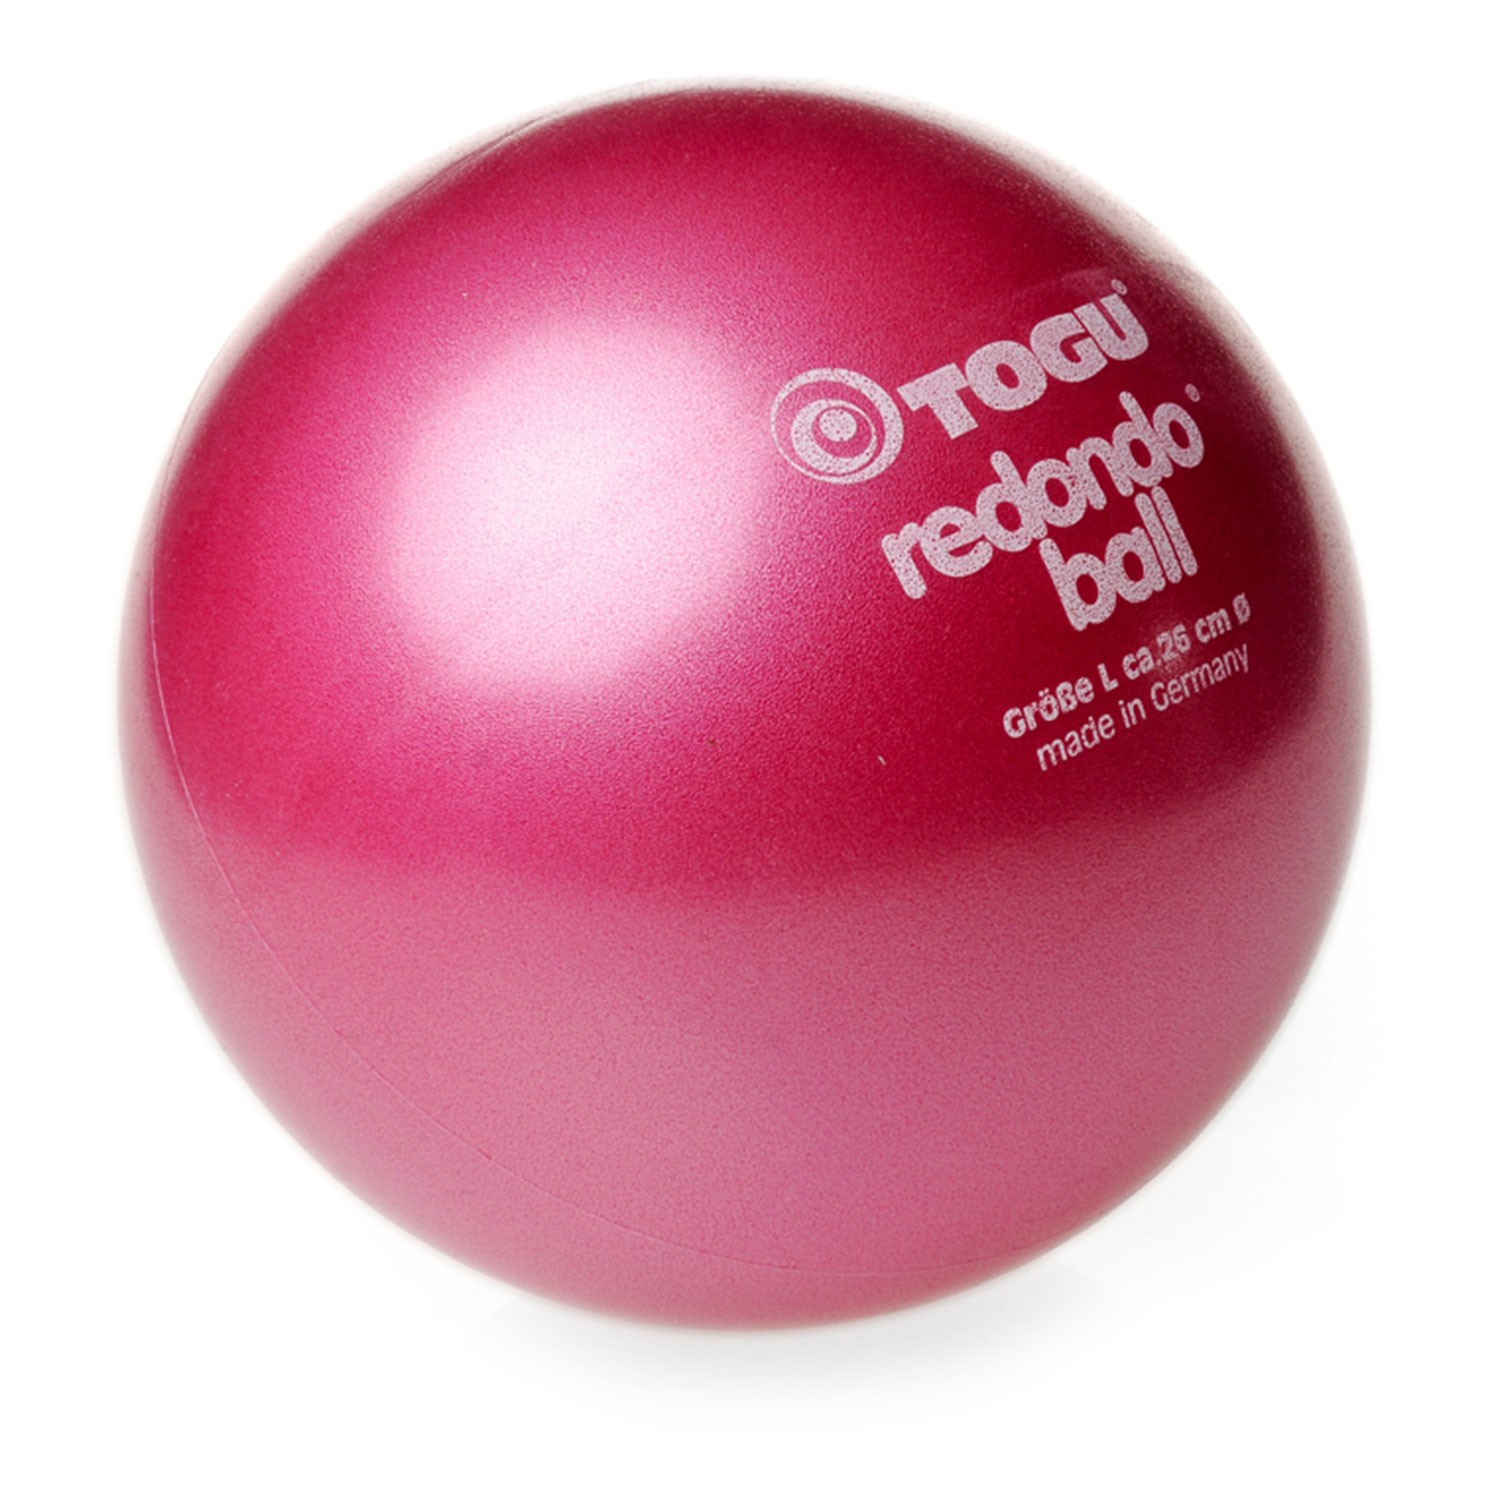 Redondo® Ball - Das Original!